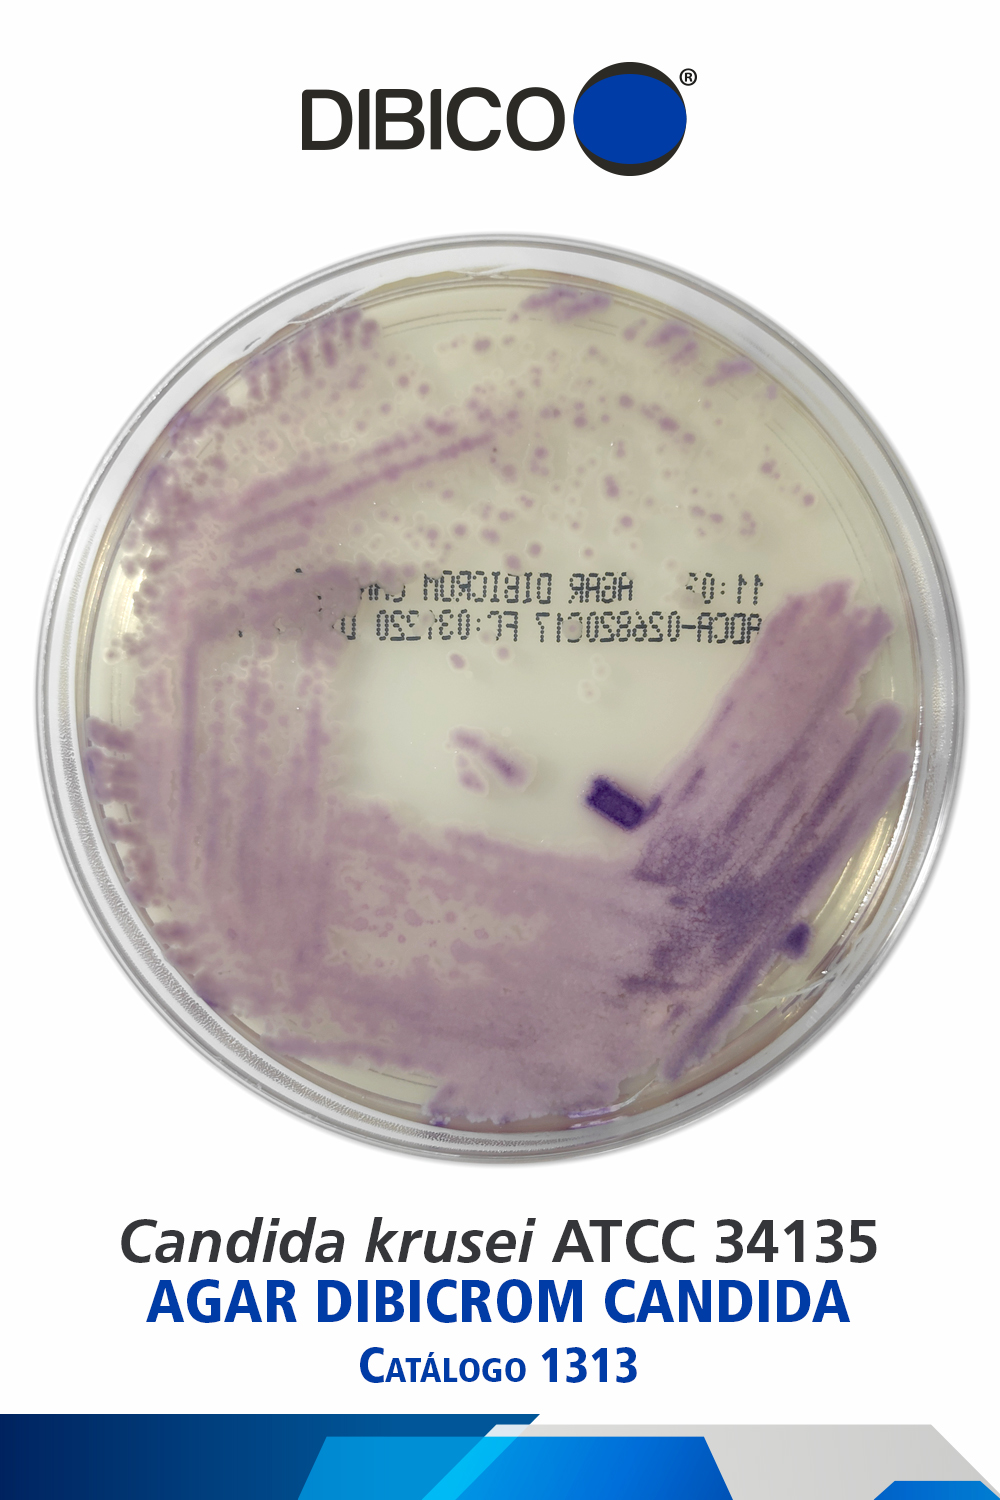 Candida krusei ATCC 34135